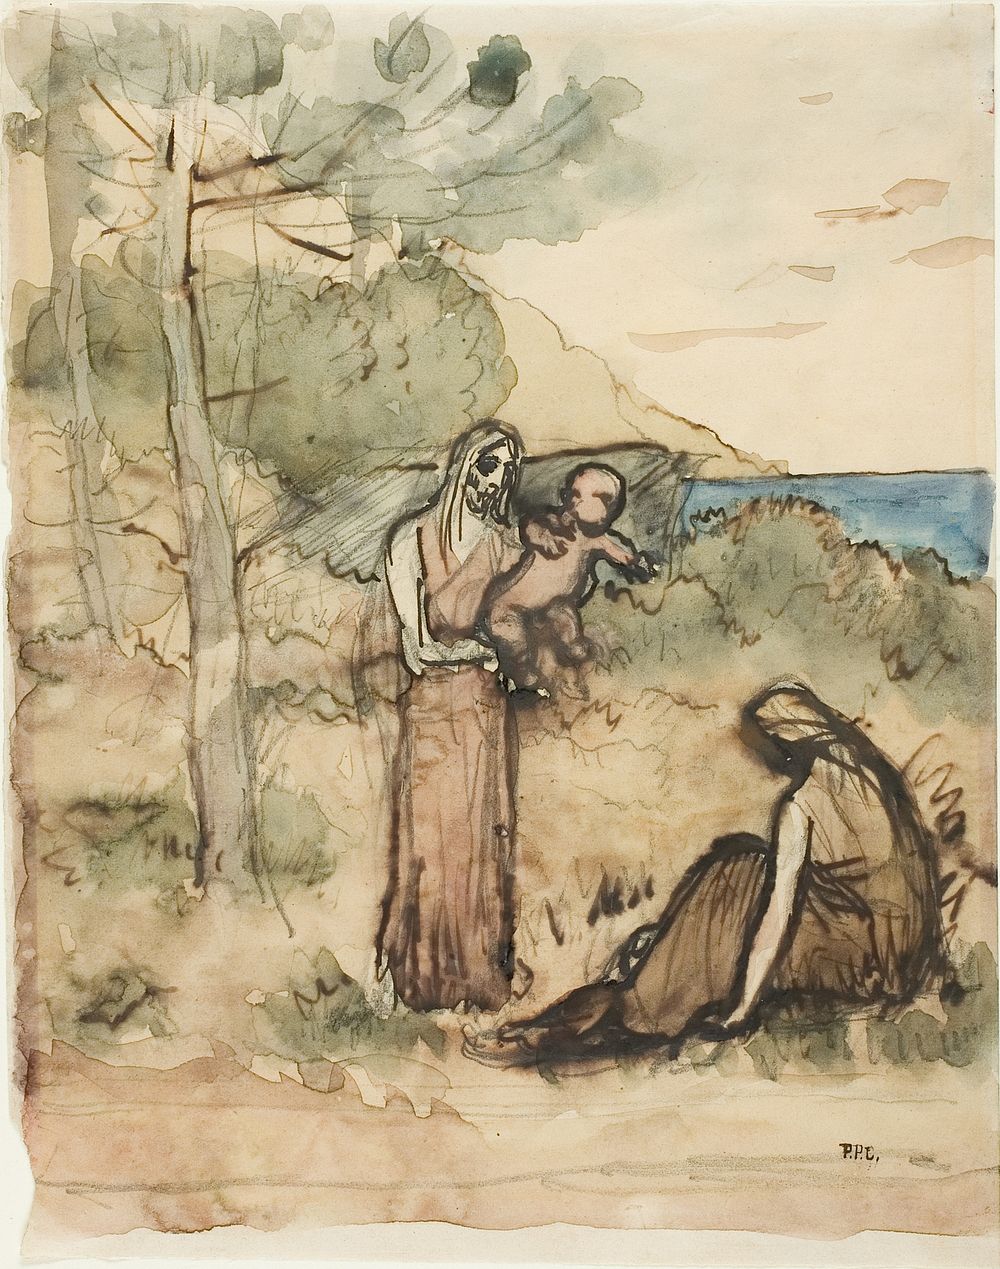 Fisherman's Family by Pierre Puvis de Chavannes